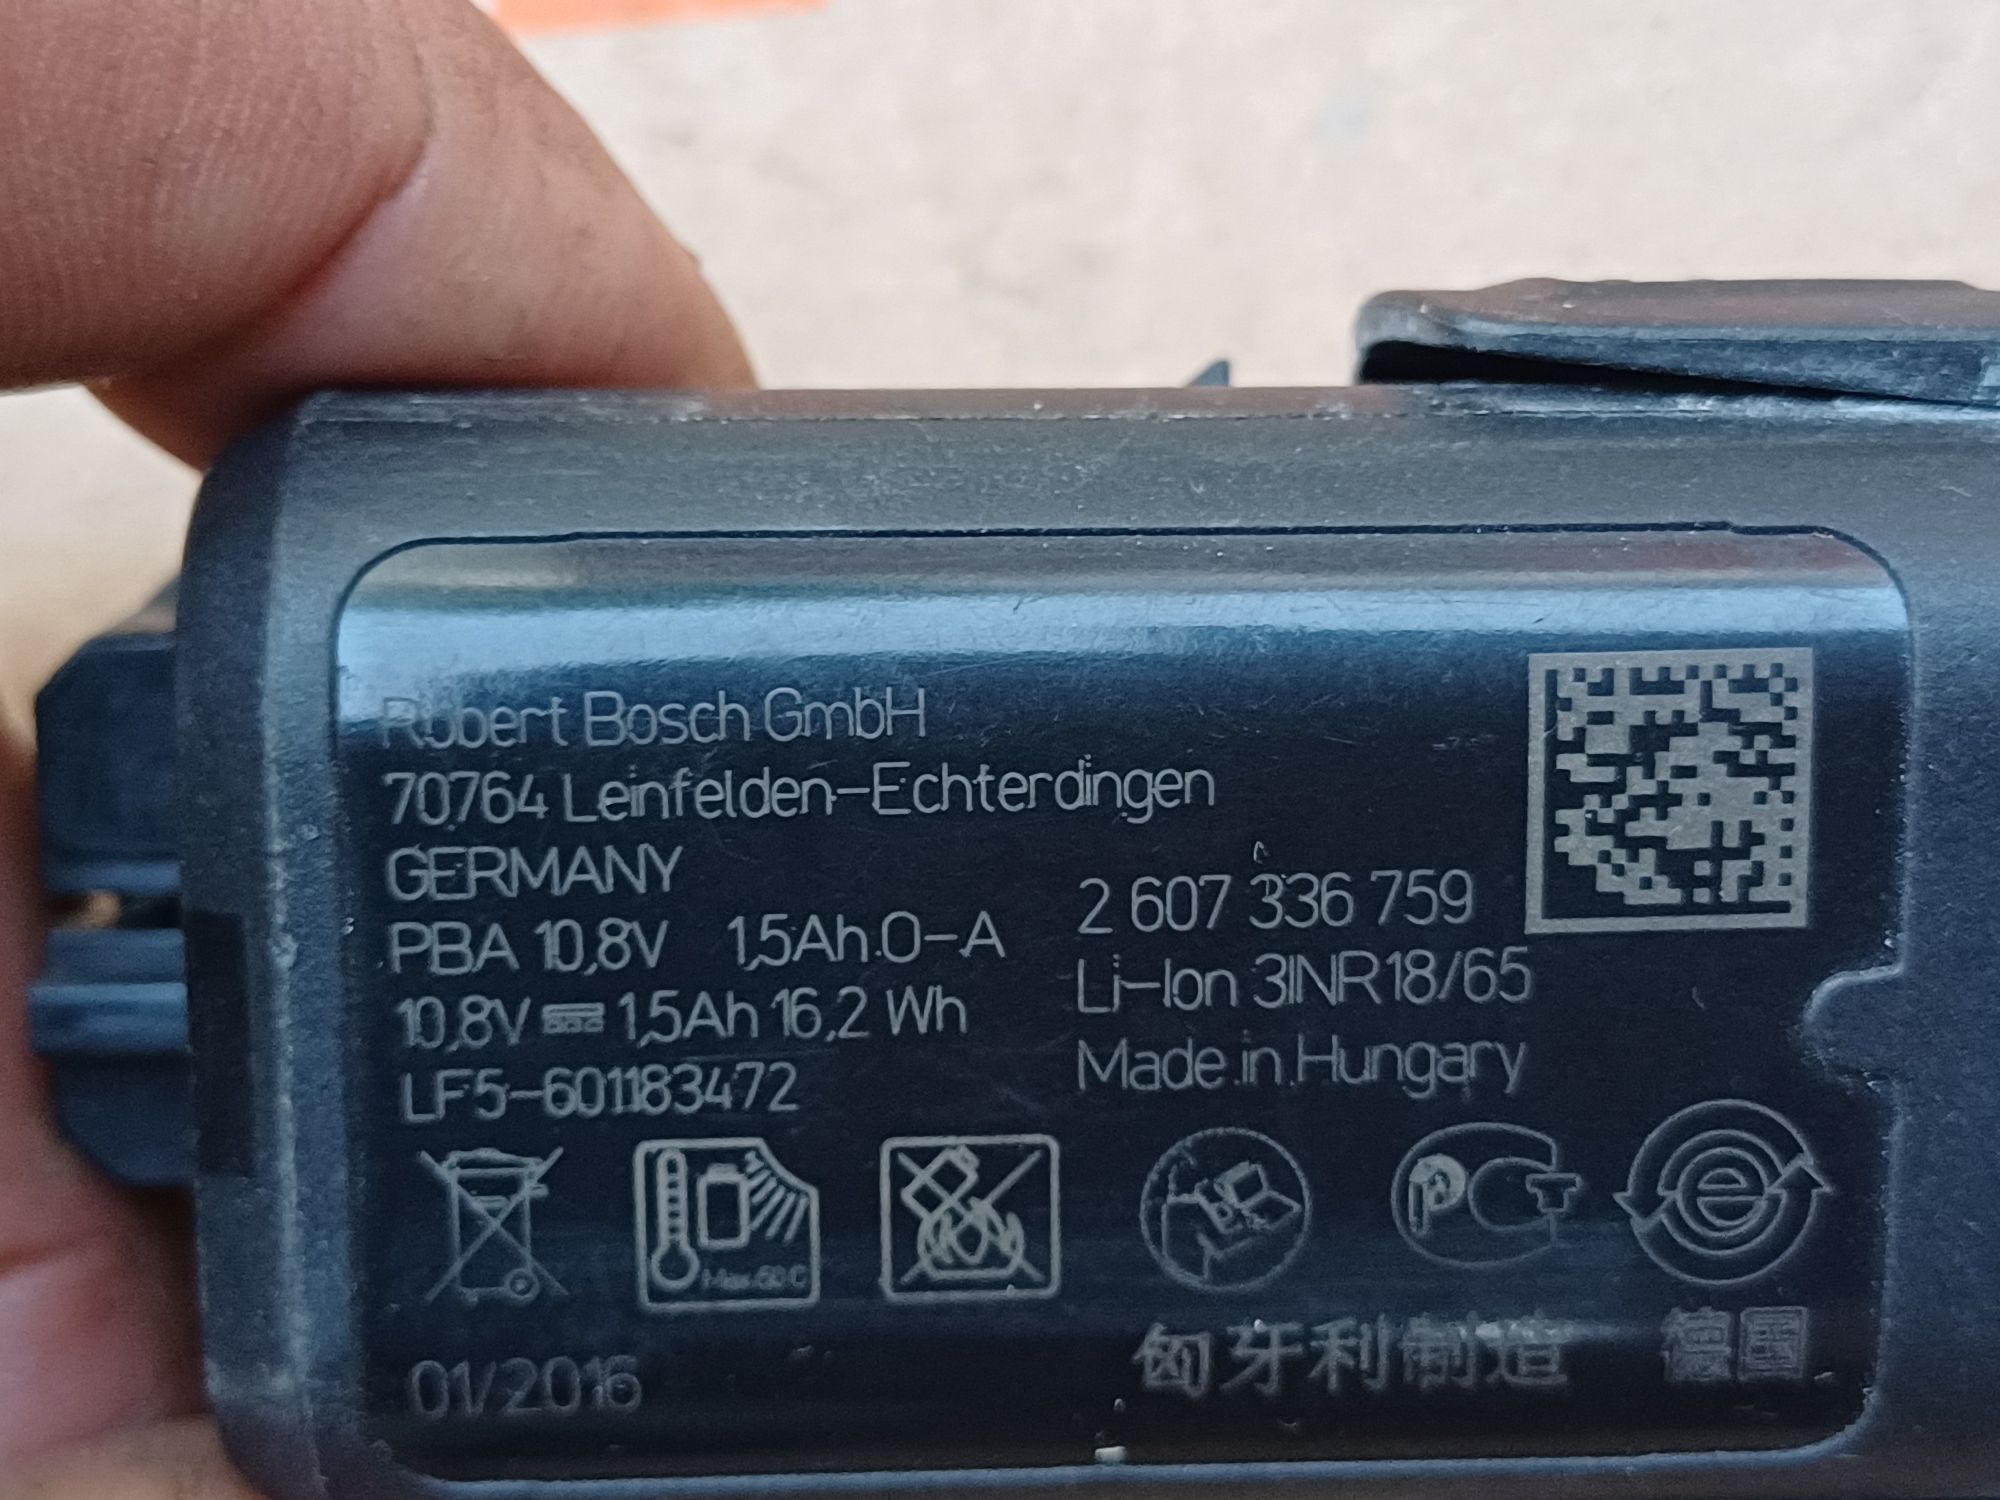 Baterie Bosch 12v 1 5A in stare buna
Este testata